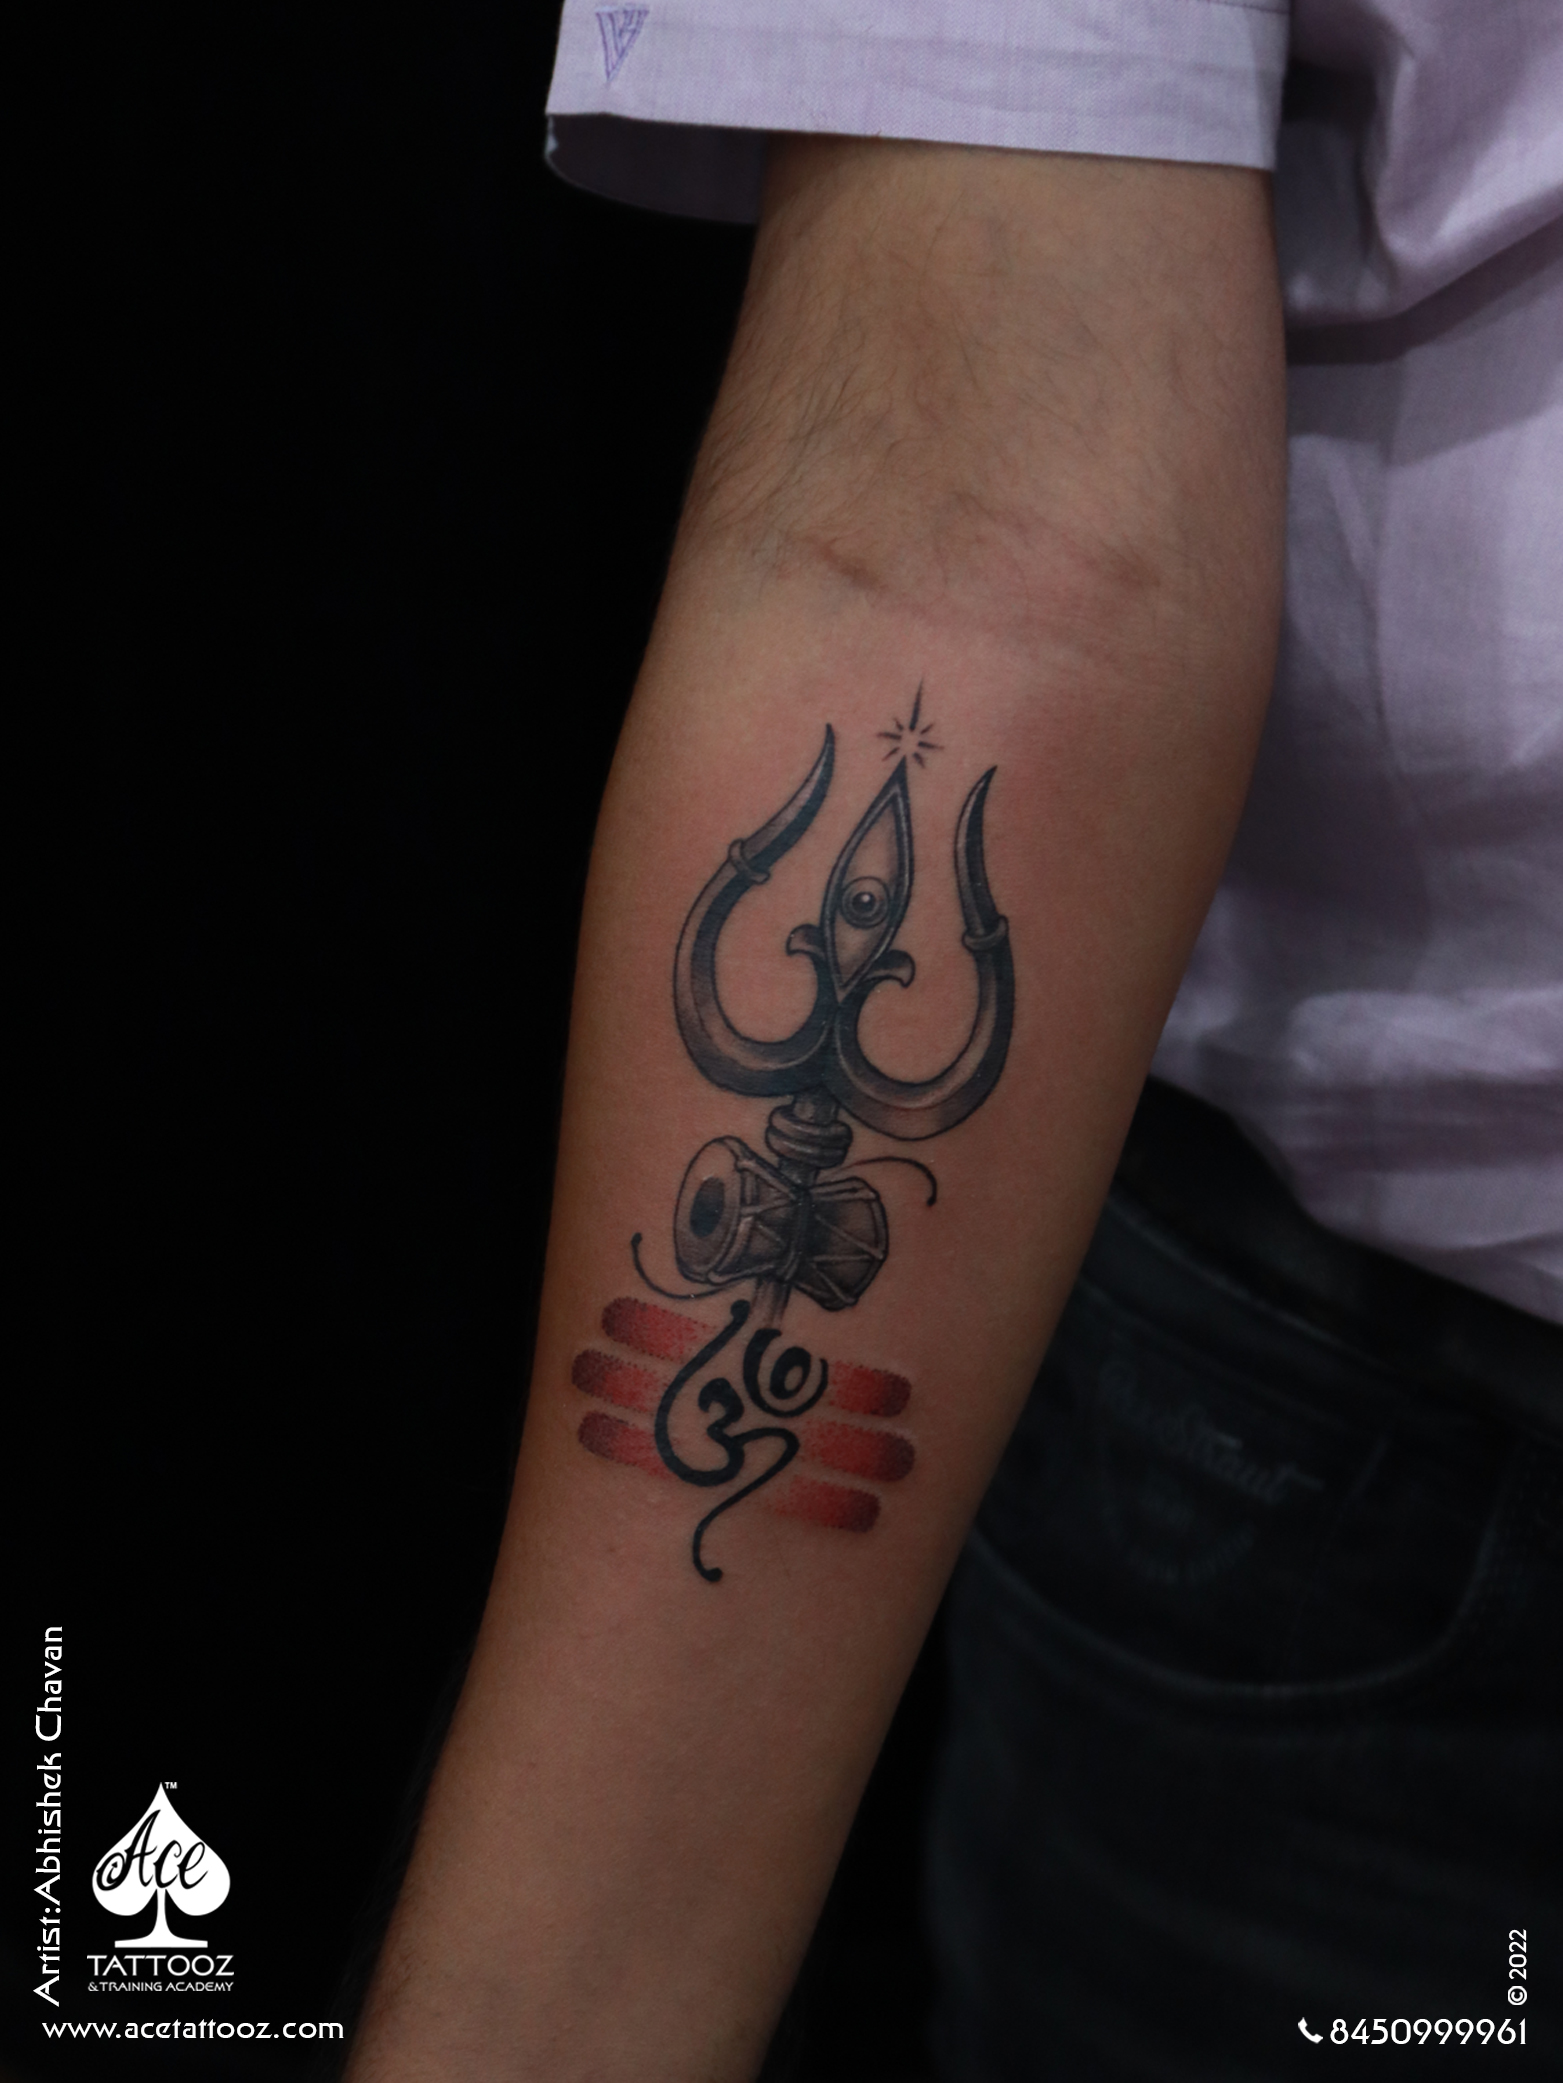 Trishul and Om Black and White Tattoo - Ace Tattooz